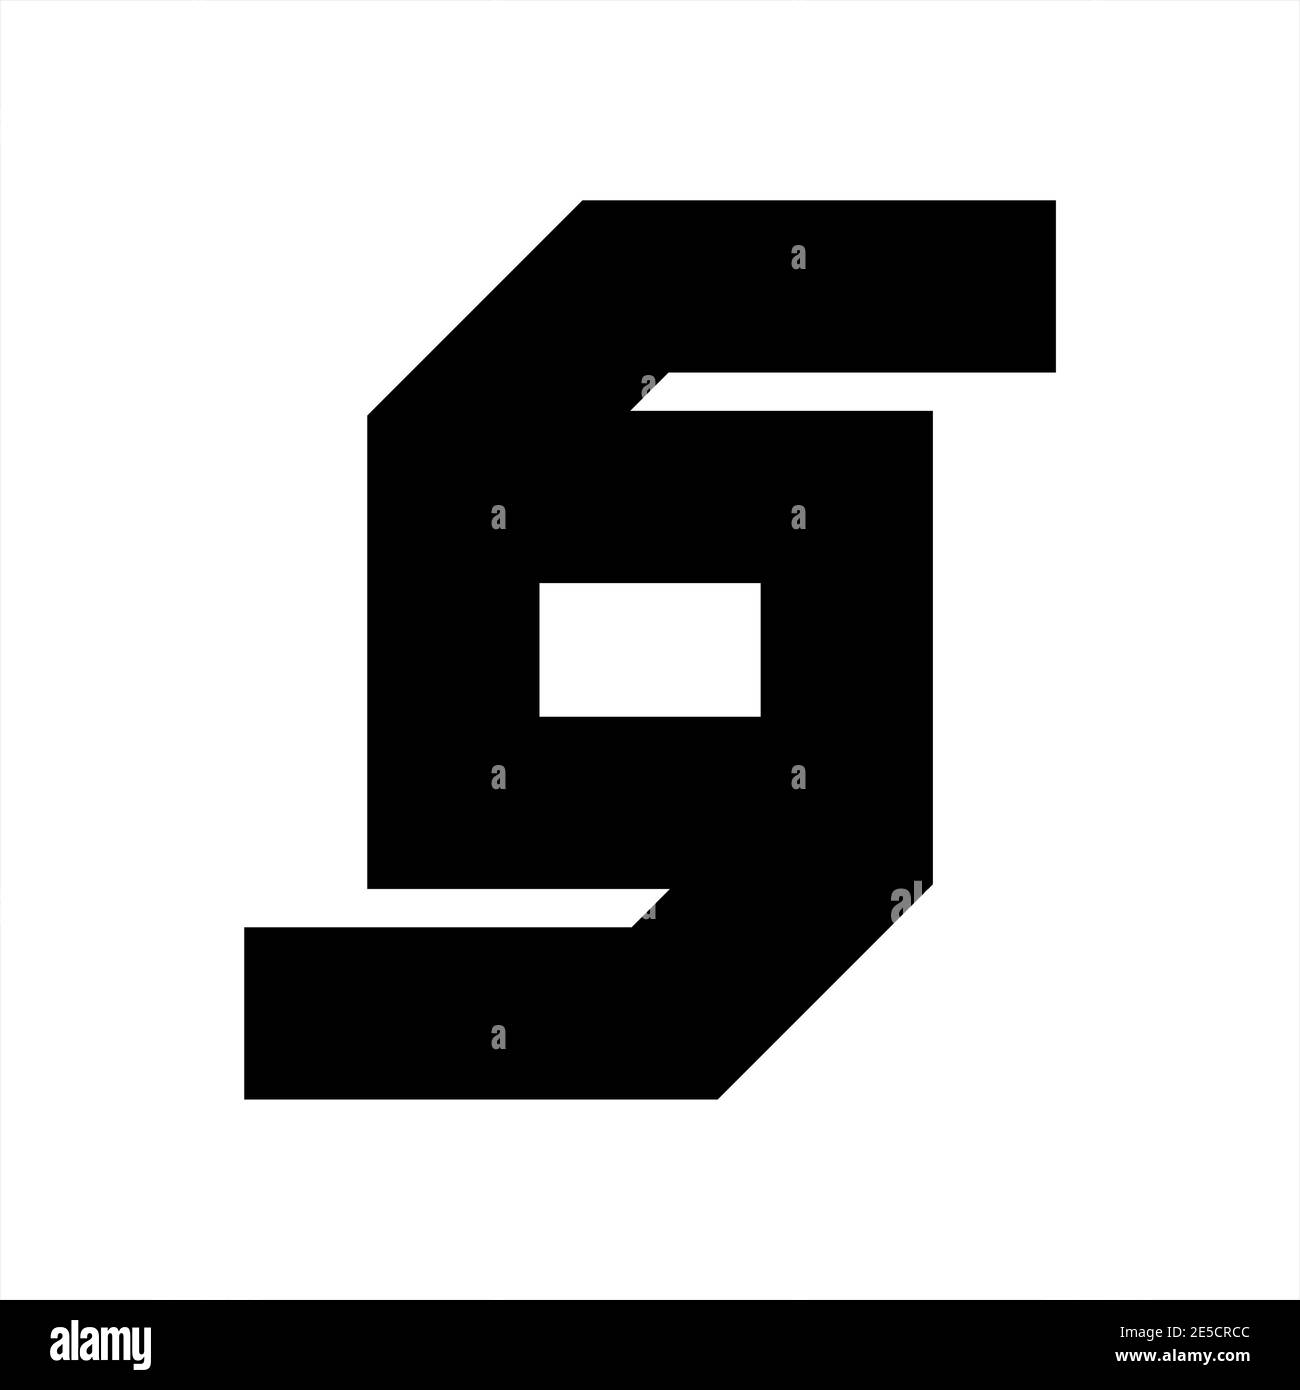 S, SO, SD, GG, GOG initials geometric letter company logo Stock Vector